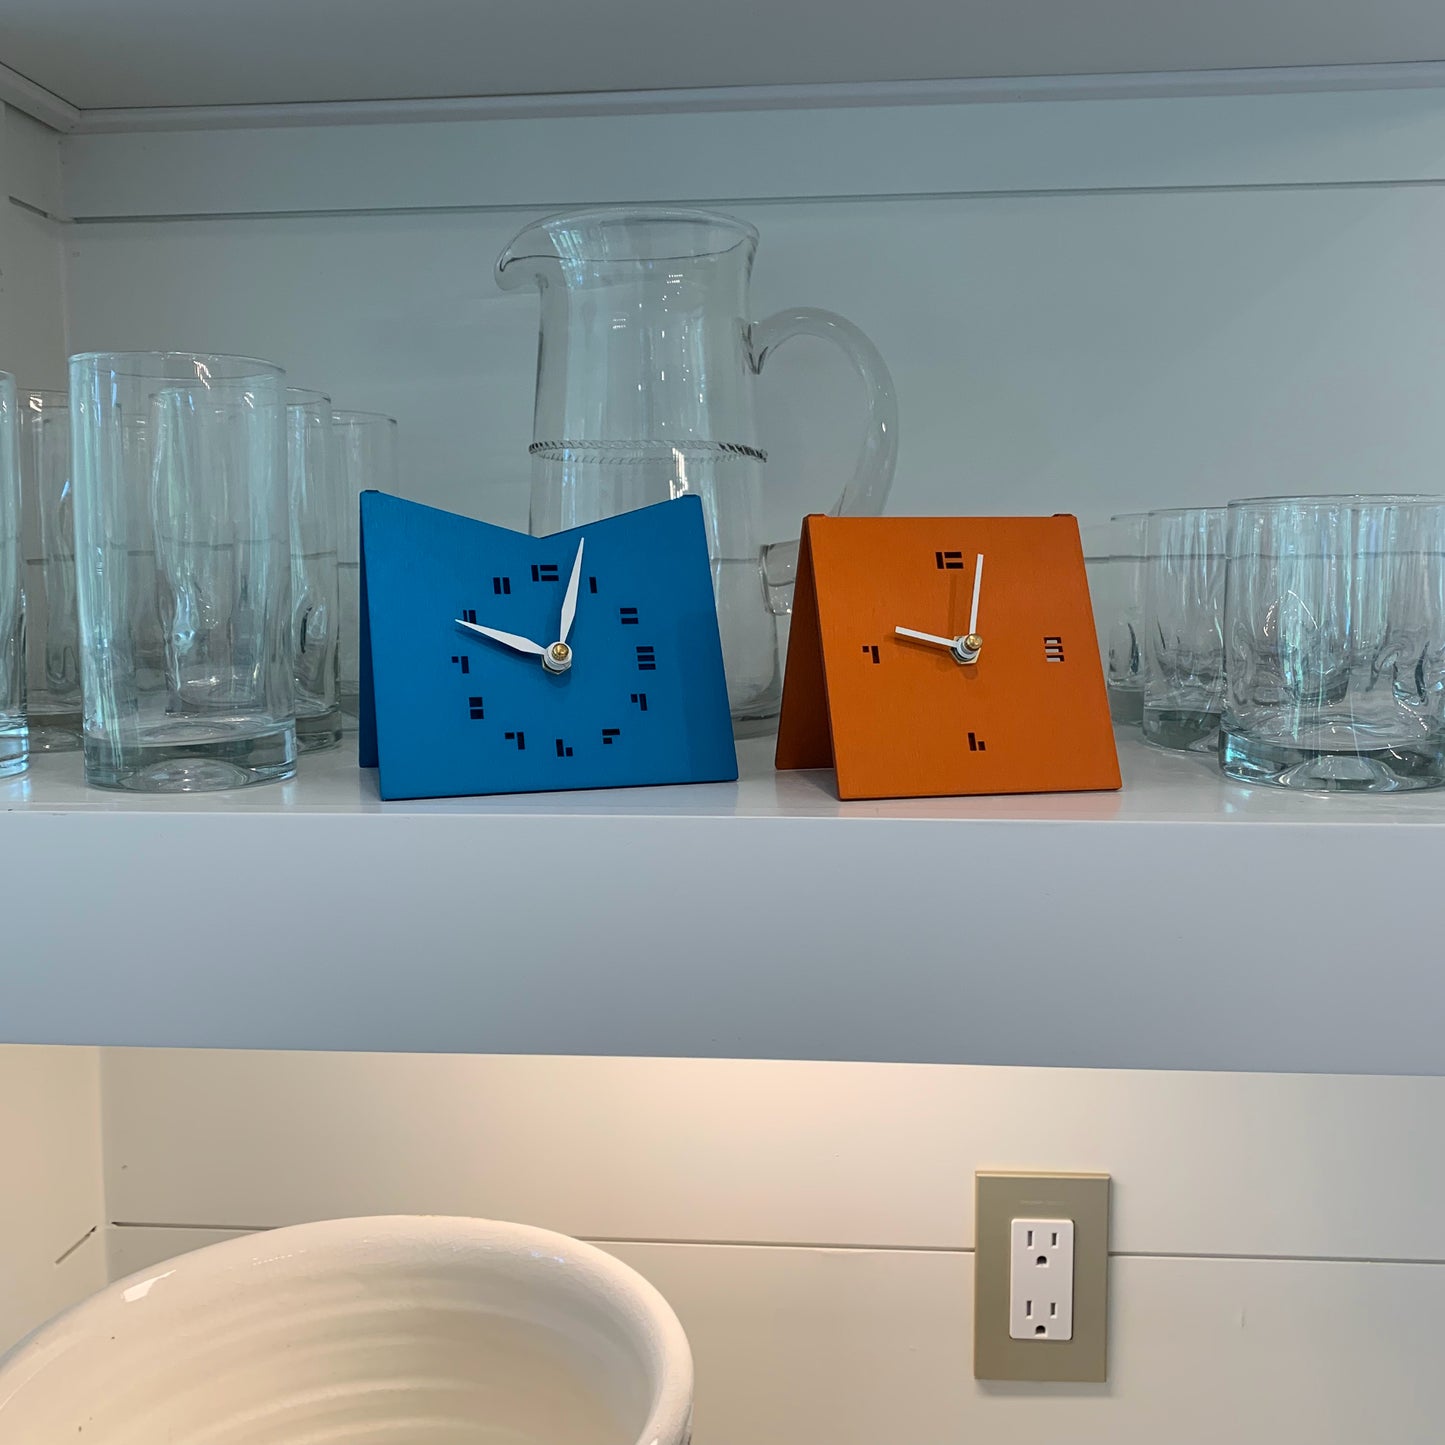 The KittyKat Clock Modern Desk Clock in aqua and orange